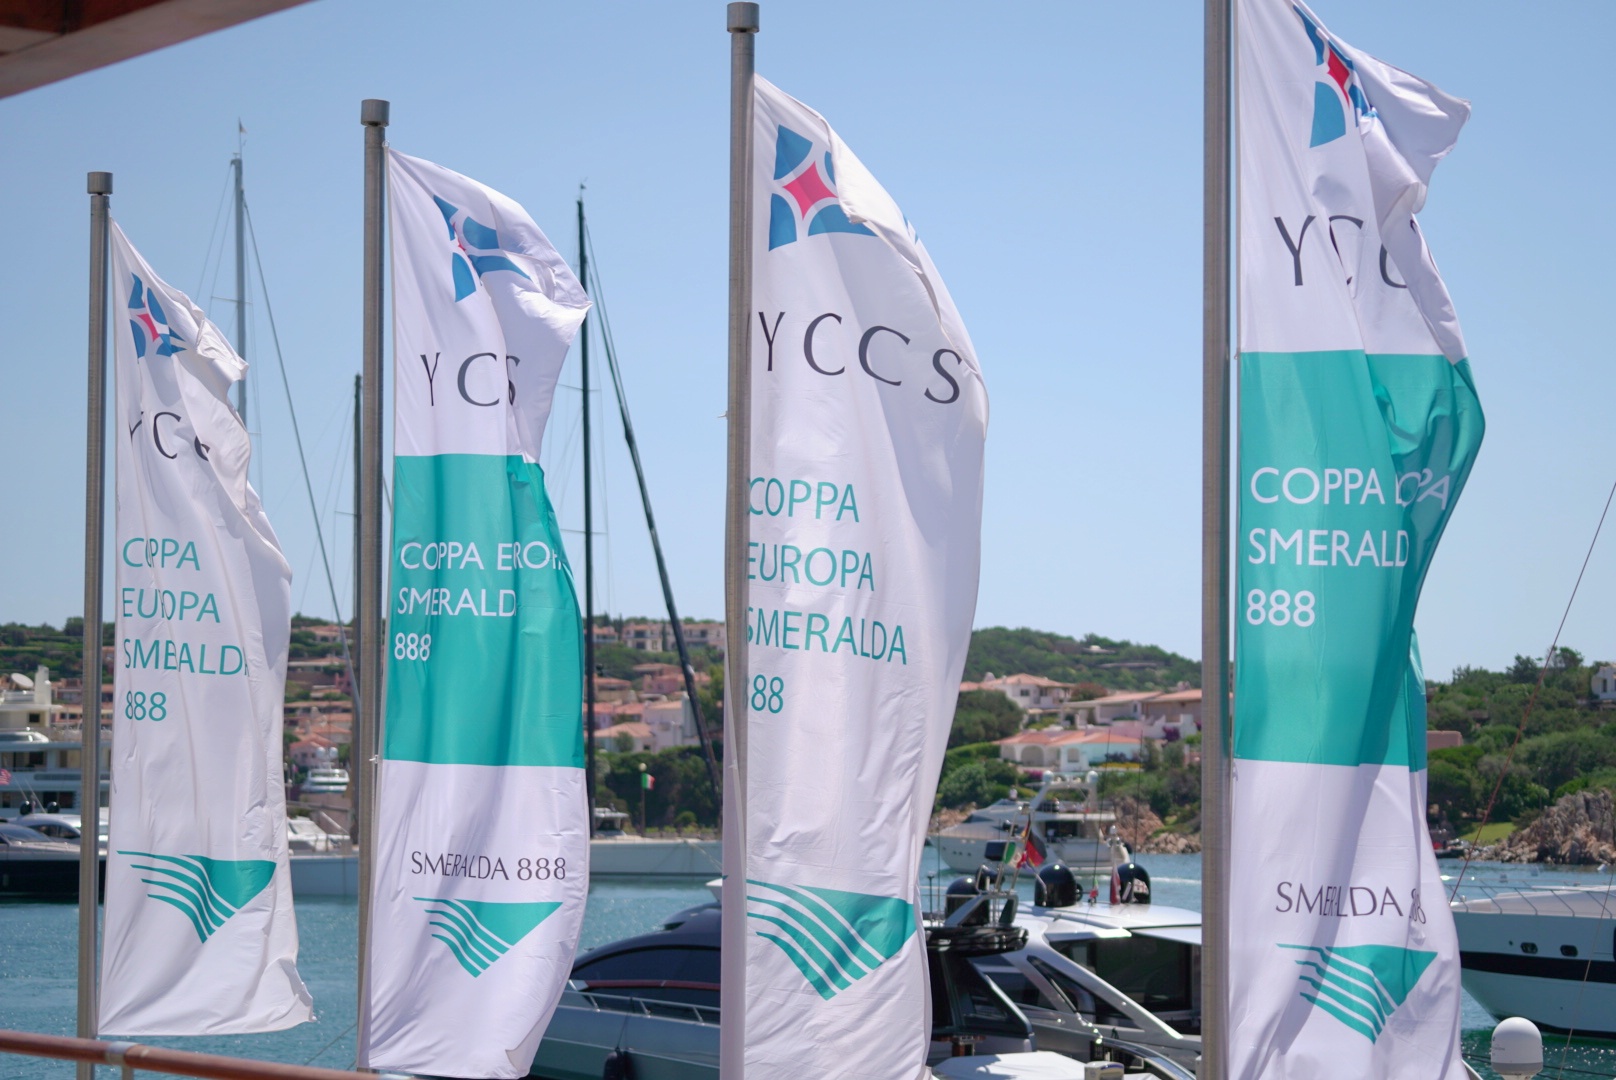 19th edition of Coppa Europa Smeralda 888 starts today - News - Yacht Club Costa Smeralda